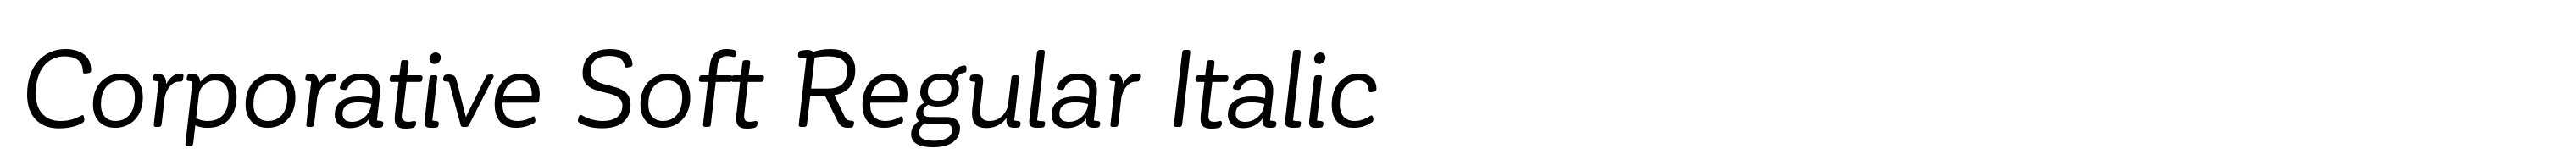 Corporative Soft Regular Italic